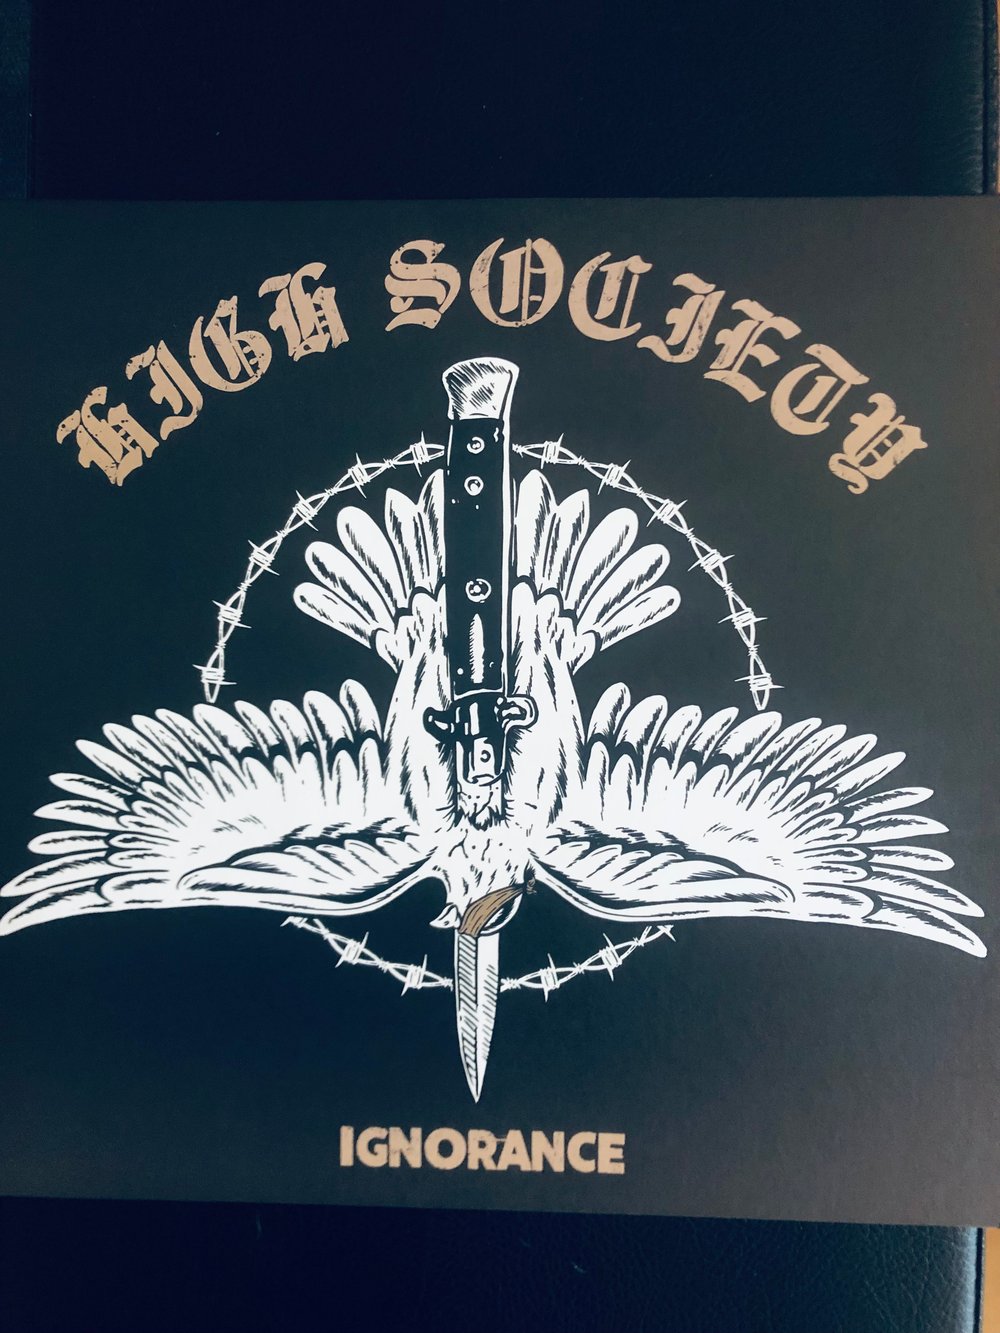 High Society - “Ignorance” LP